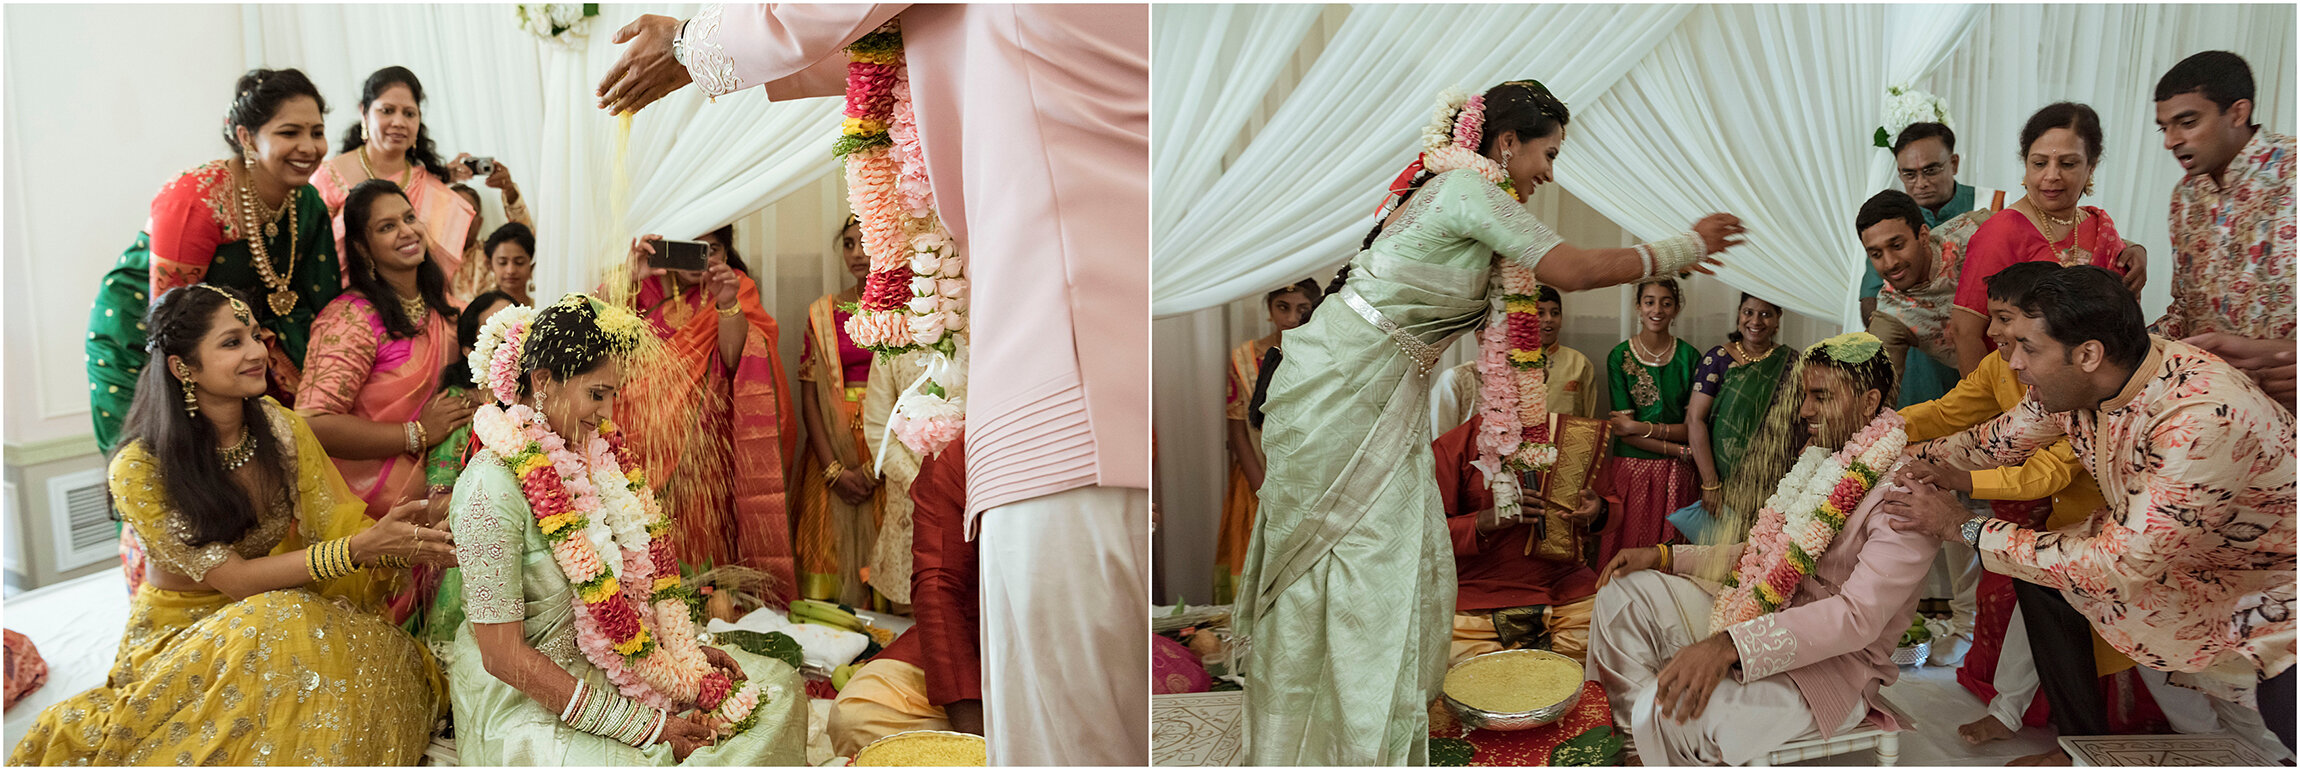 ©FianderFoto_Hindu Wedding_Bermuda_065.jpg